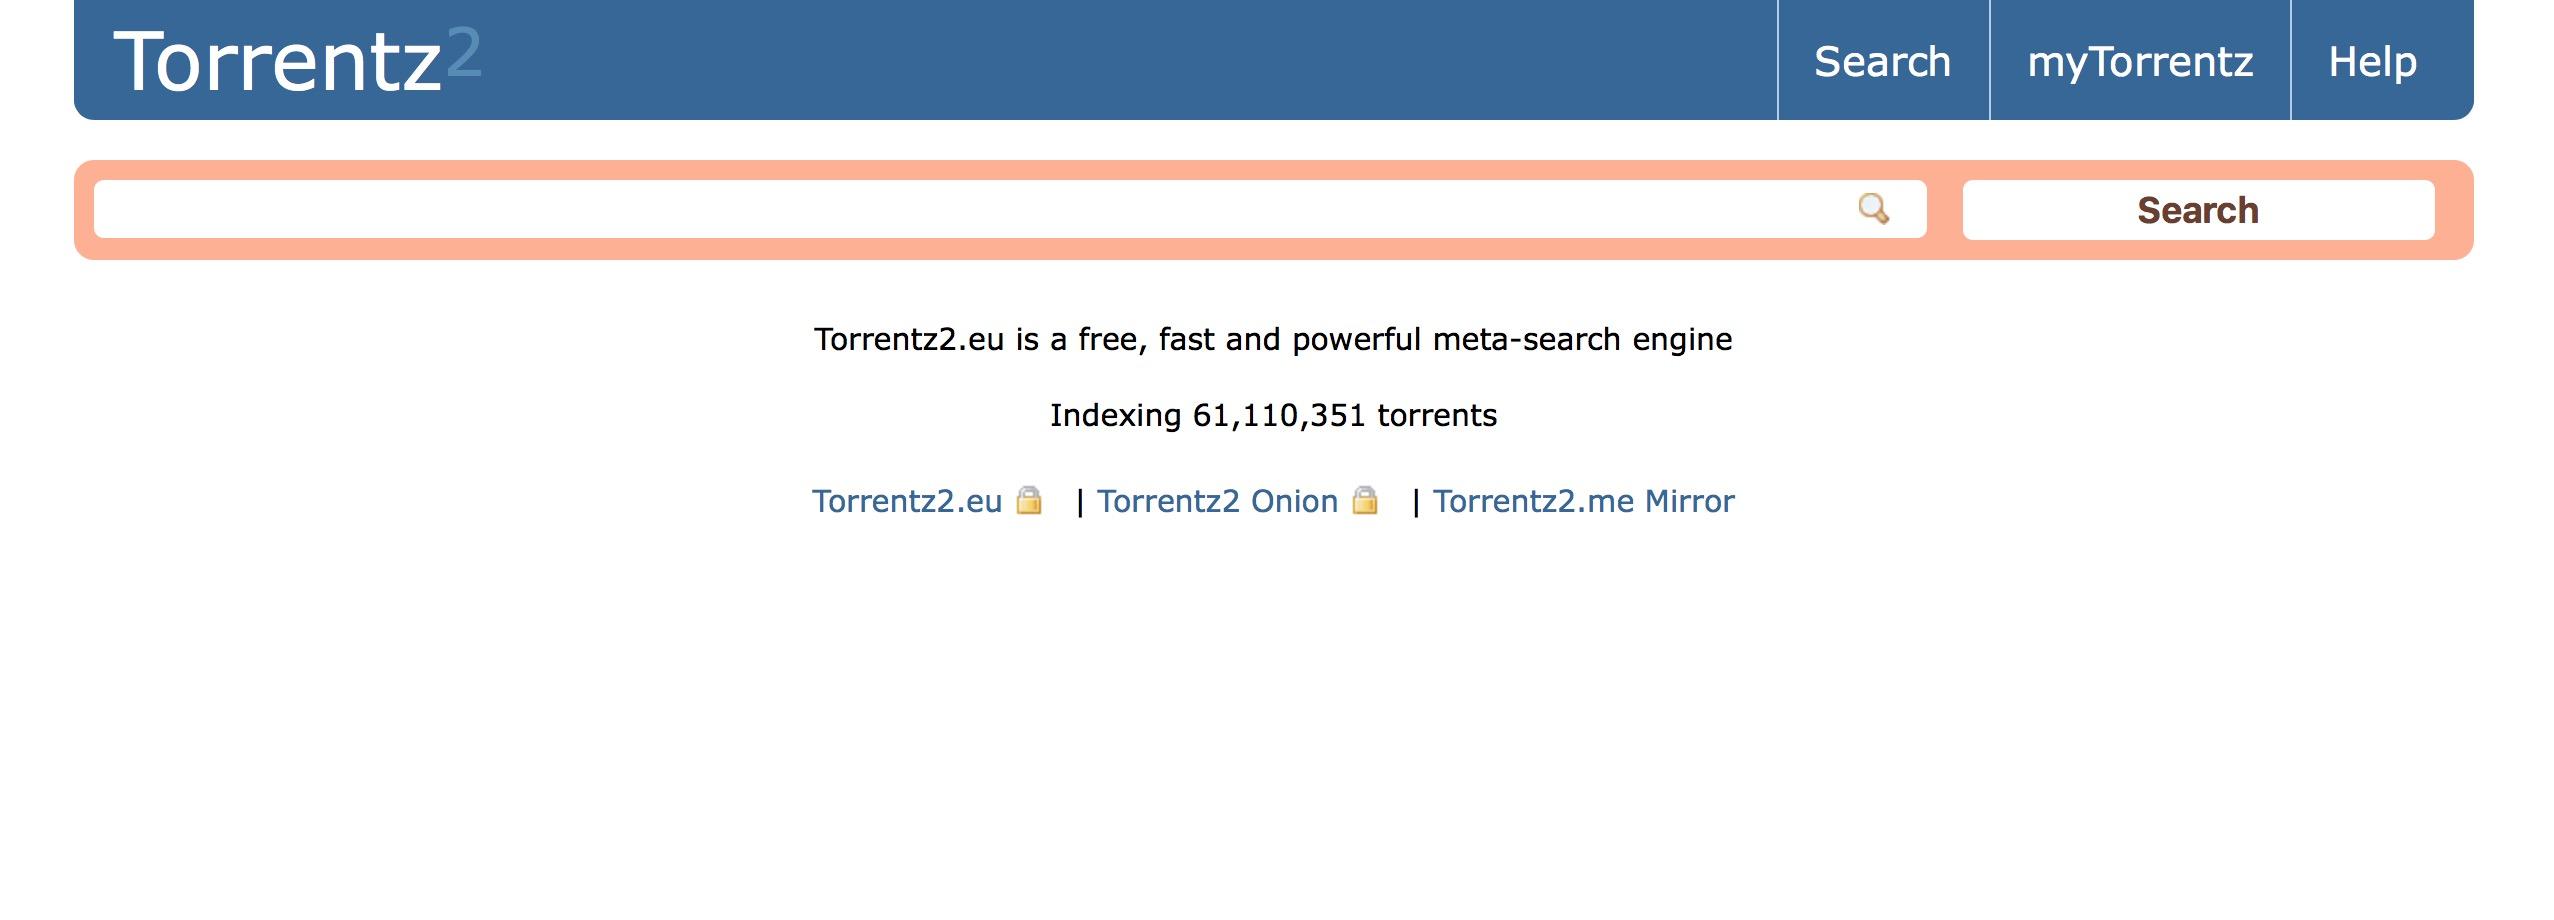 Come utilizzare Torrentz2 per scaricare file via torrent